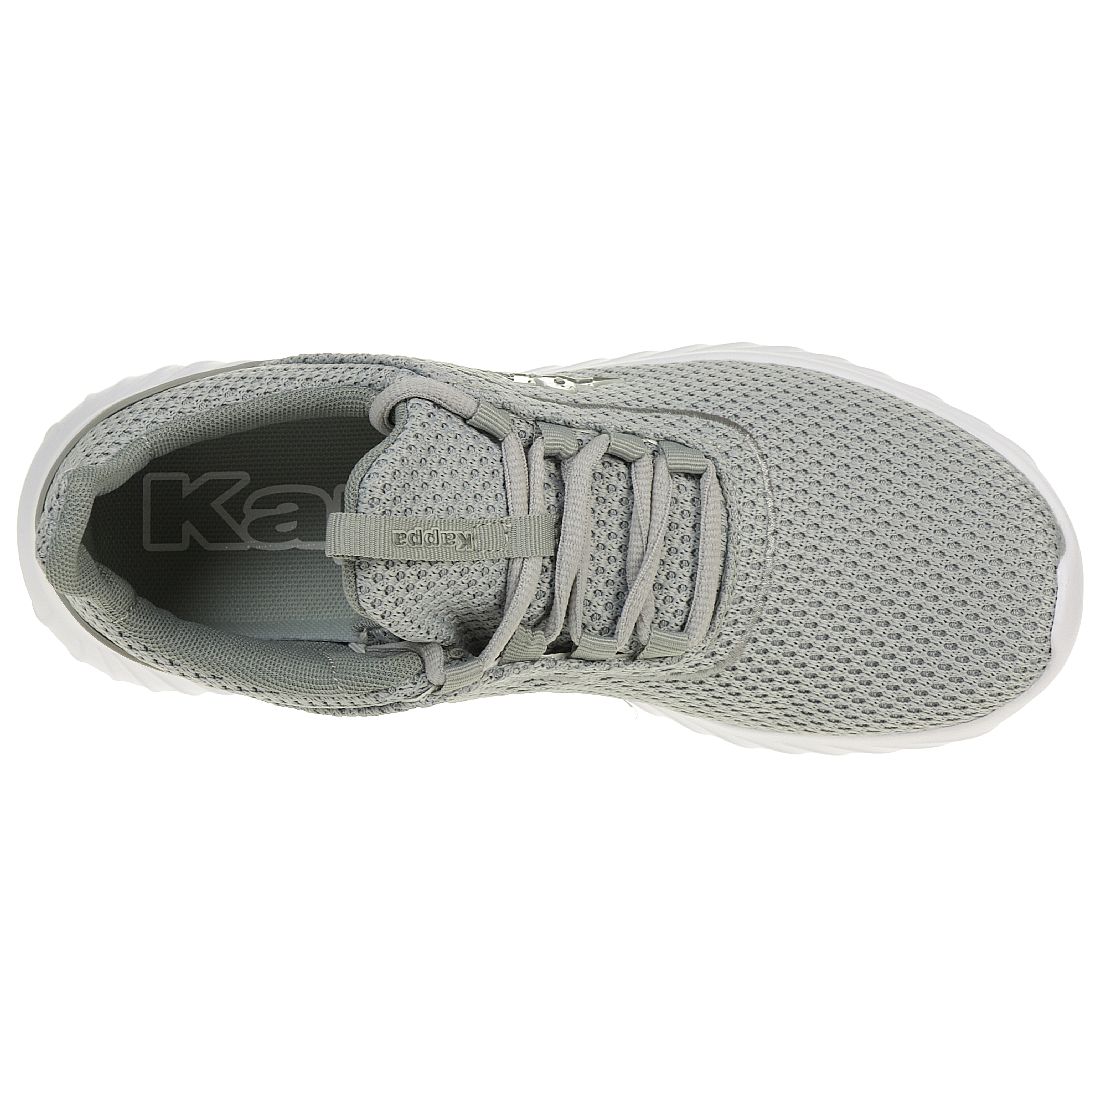 Kappa Sneaker Unisex Turnschuhe Schuhe grau 242684